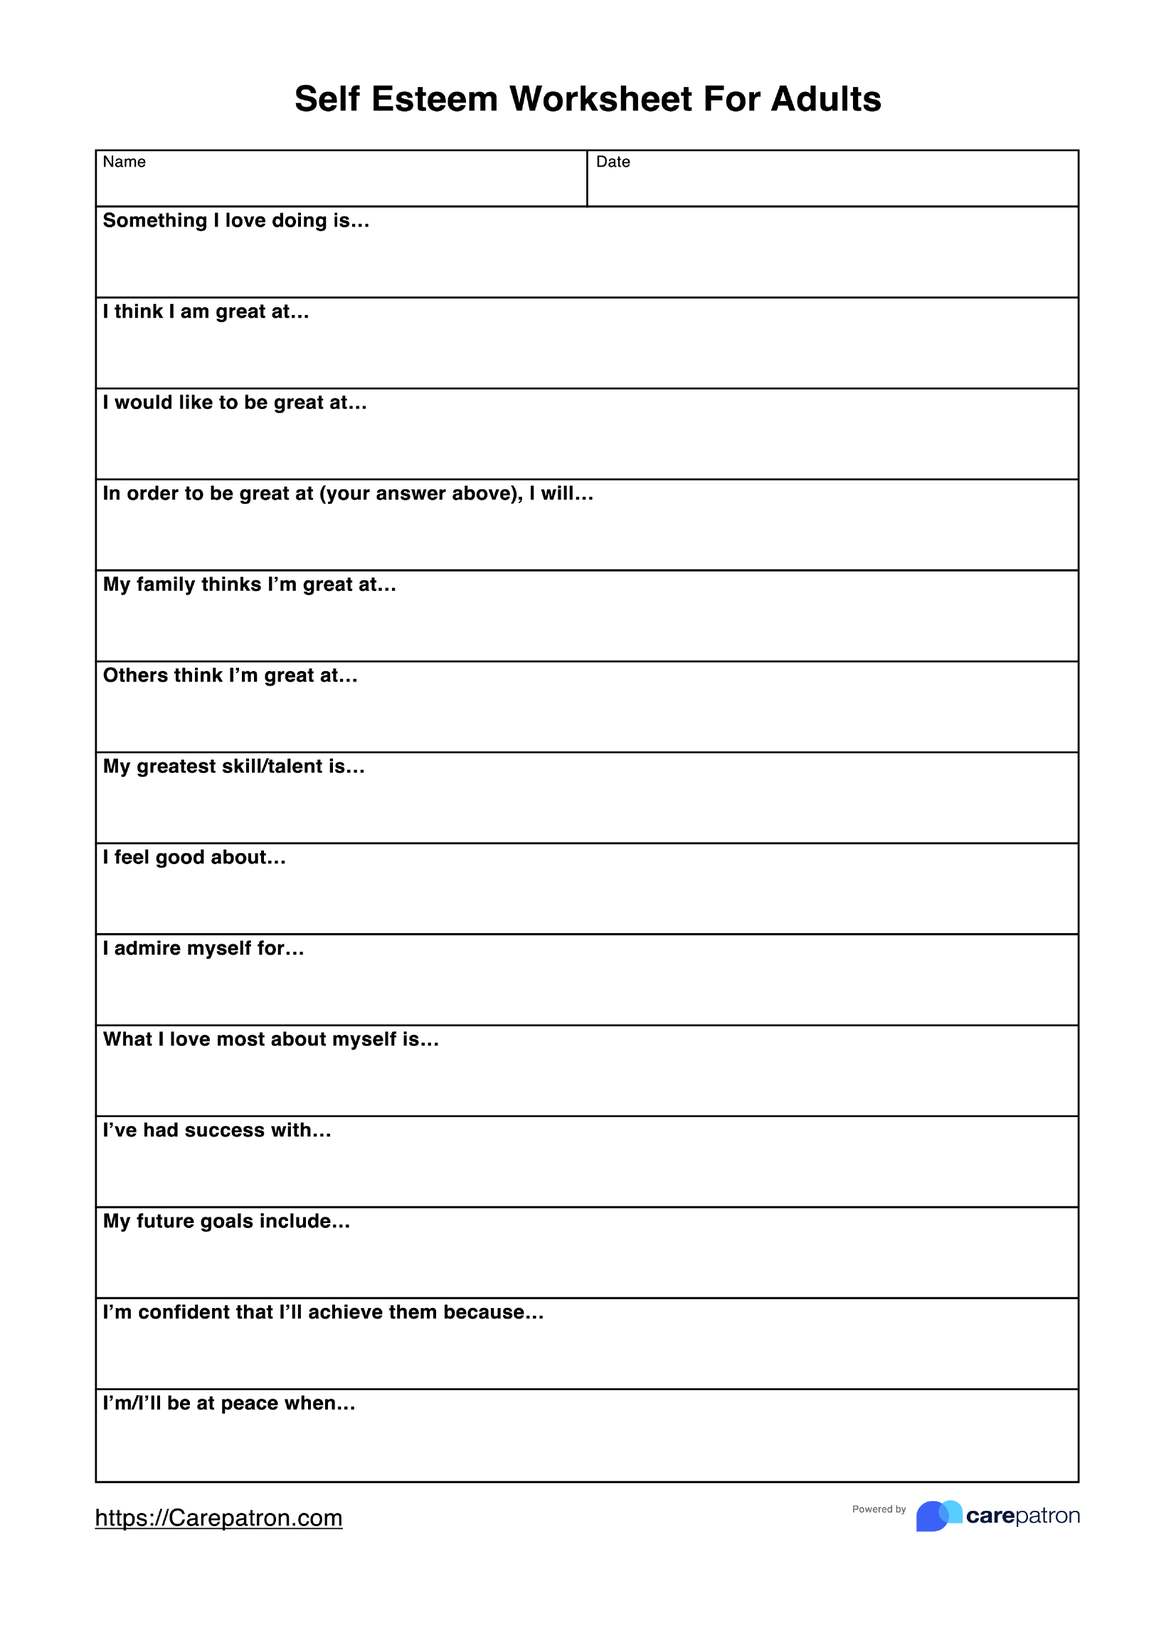 Self-Esteem Worksheet for Adults PDF Example